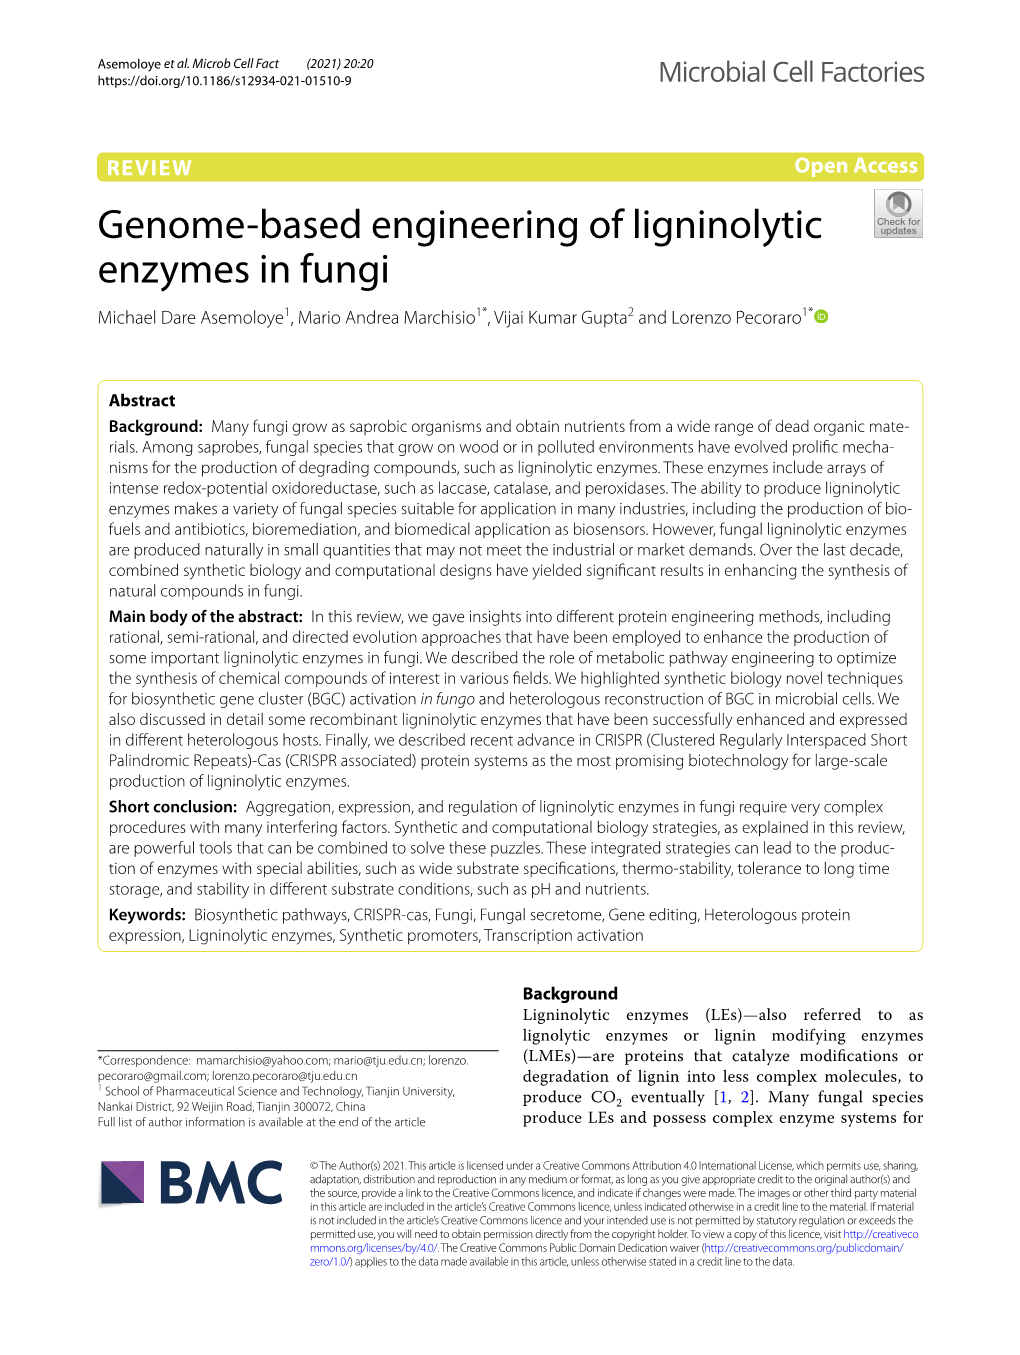 Genome-Based Engineering of Ligninolytic Enzymes in Fungi